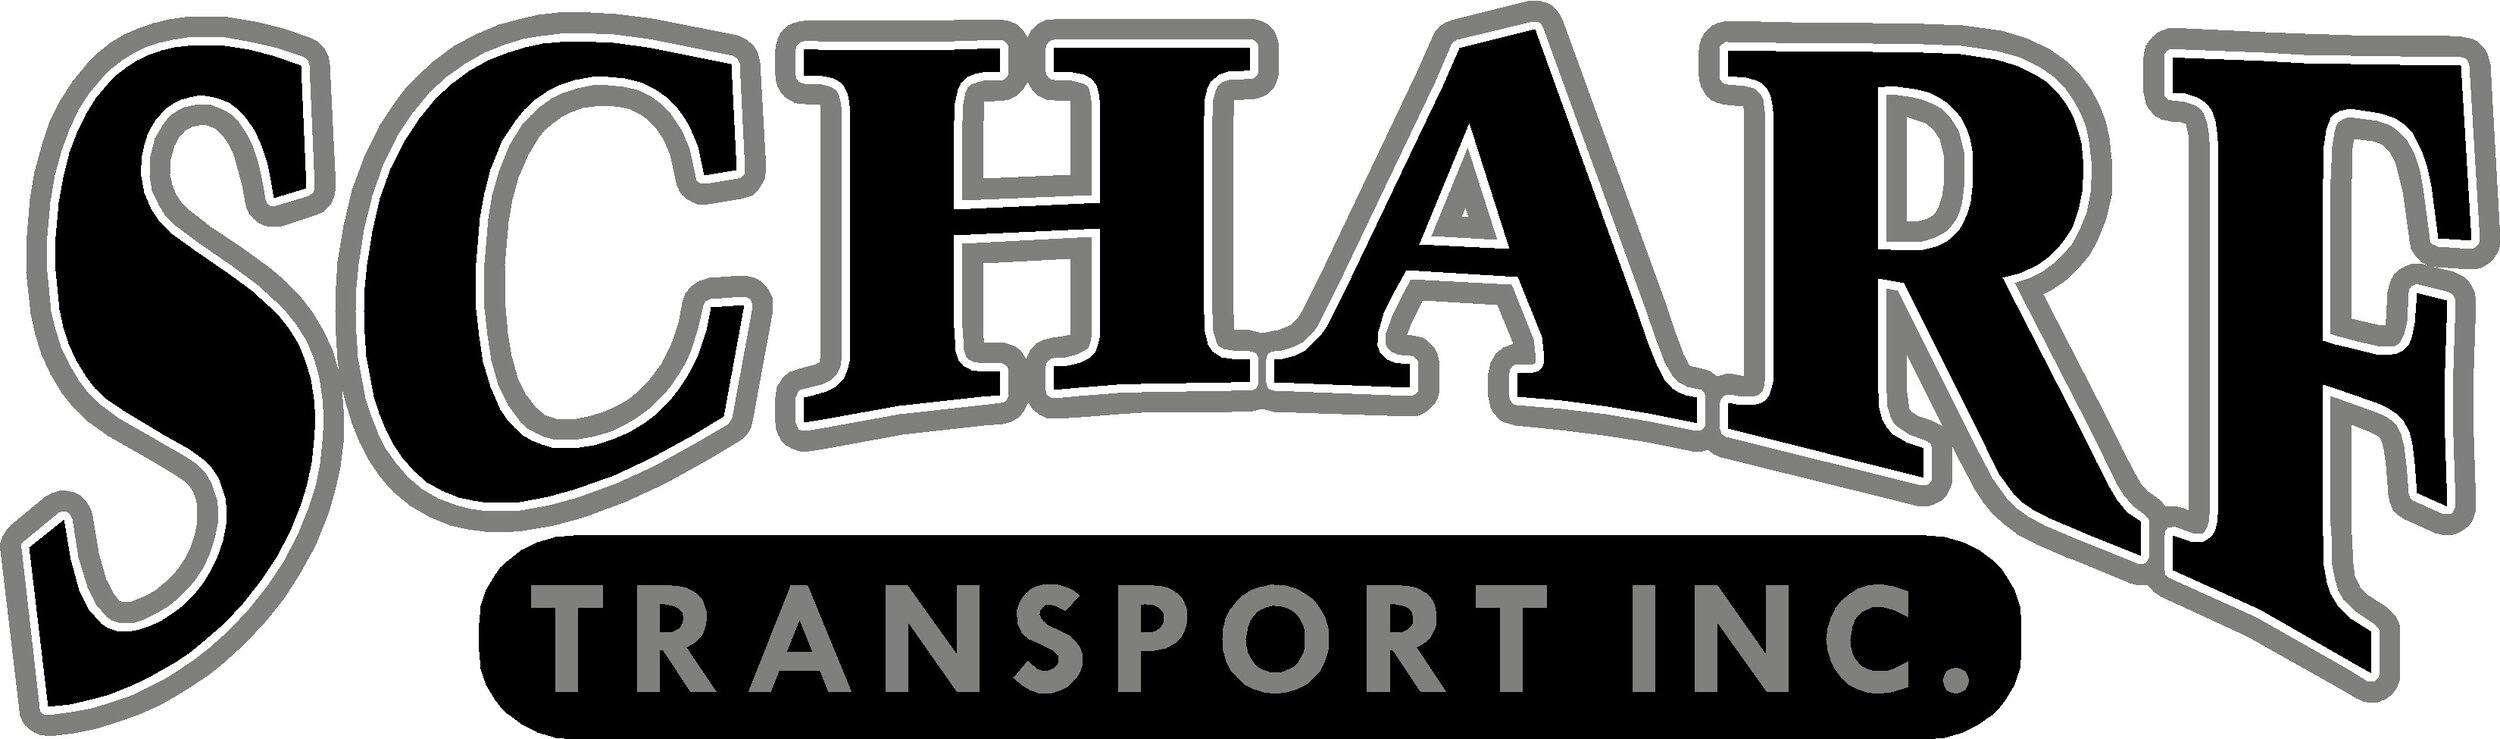 Scharf Transport, Inc